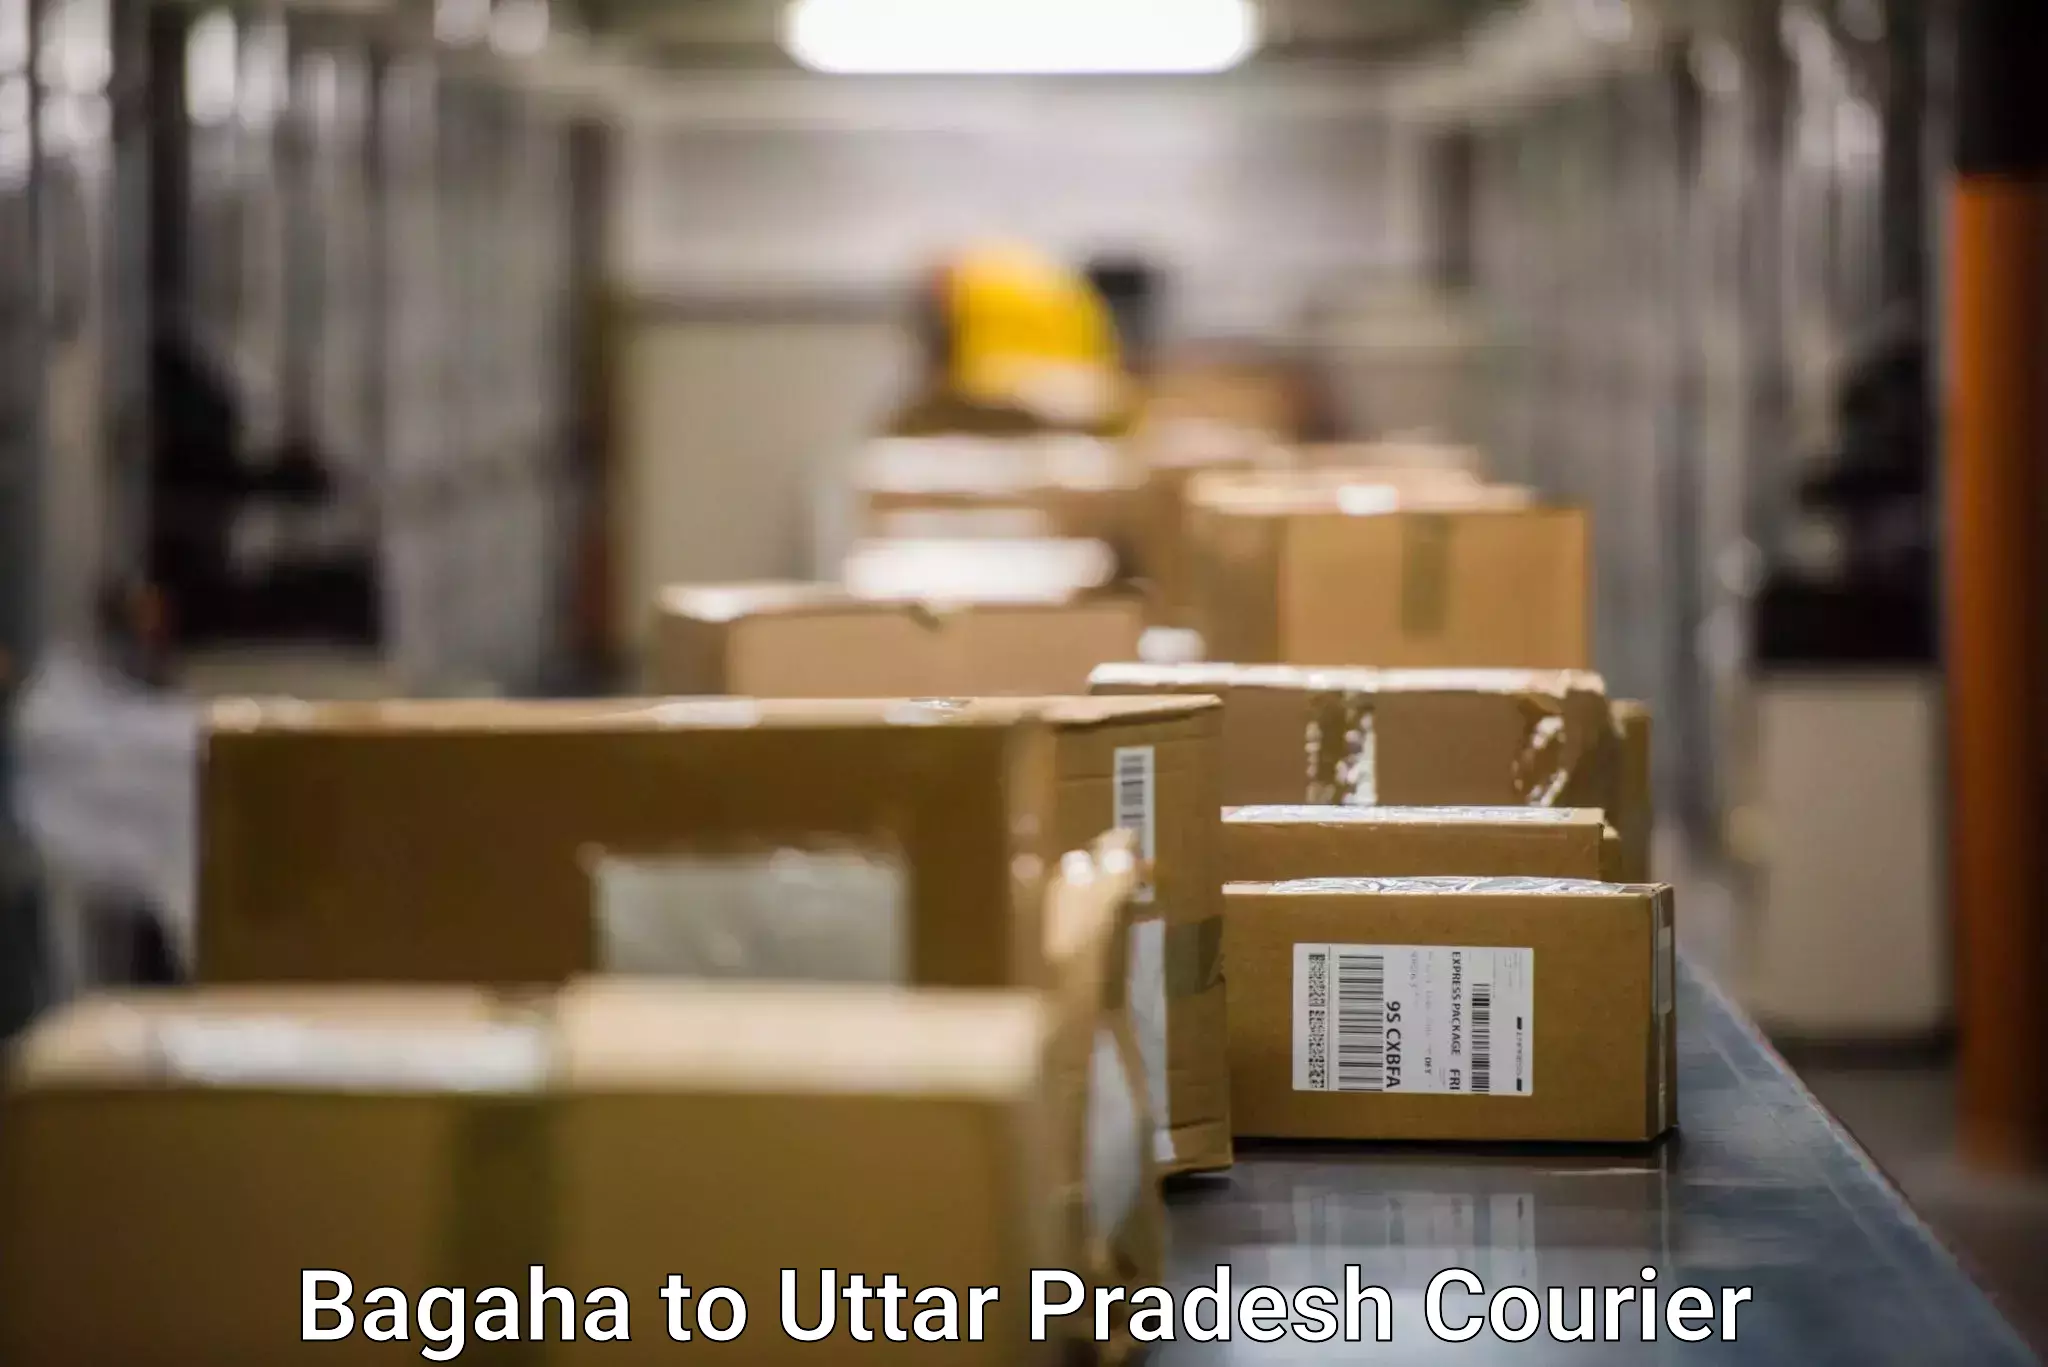 Courier service partnerships in Bagaha to Varanasi